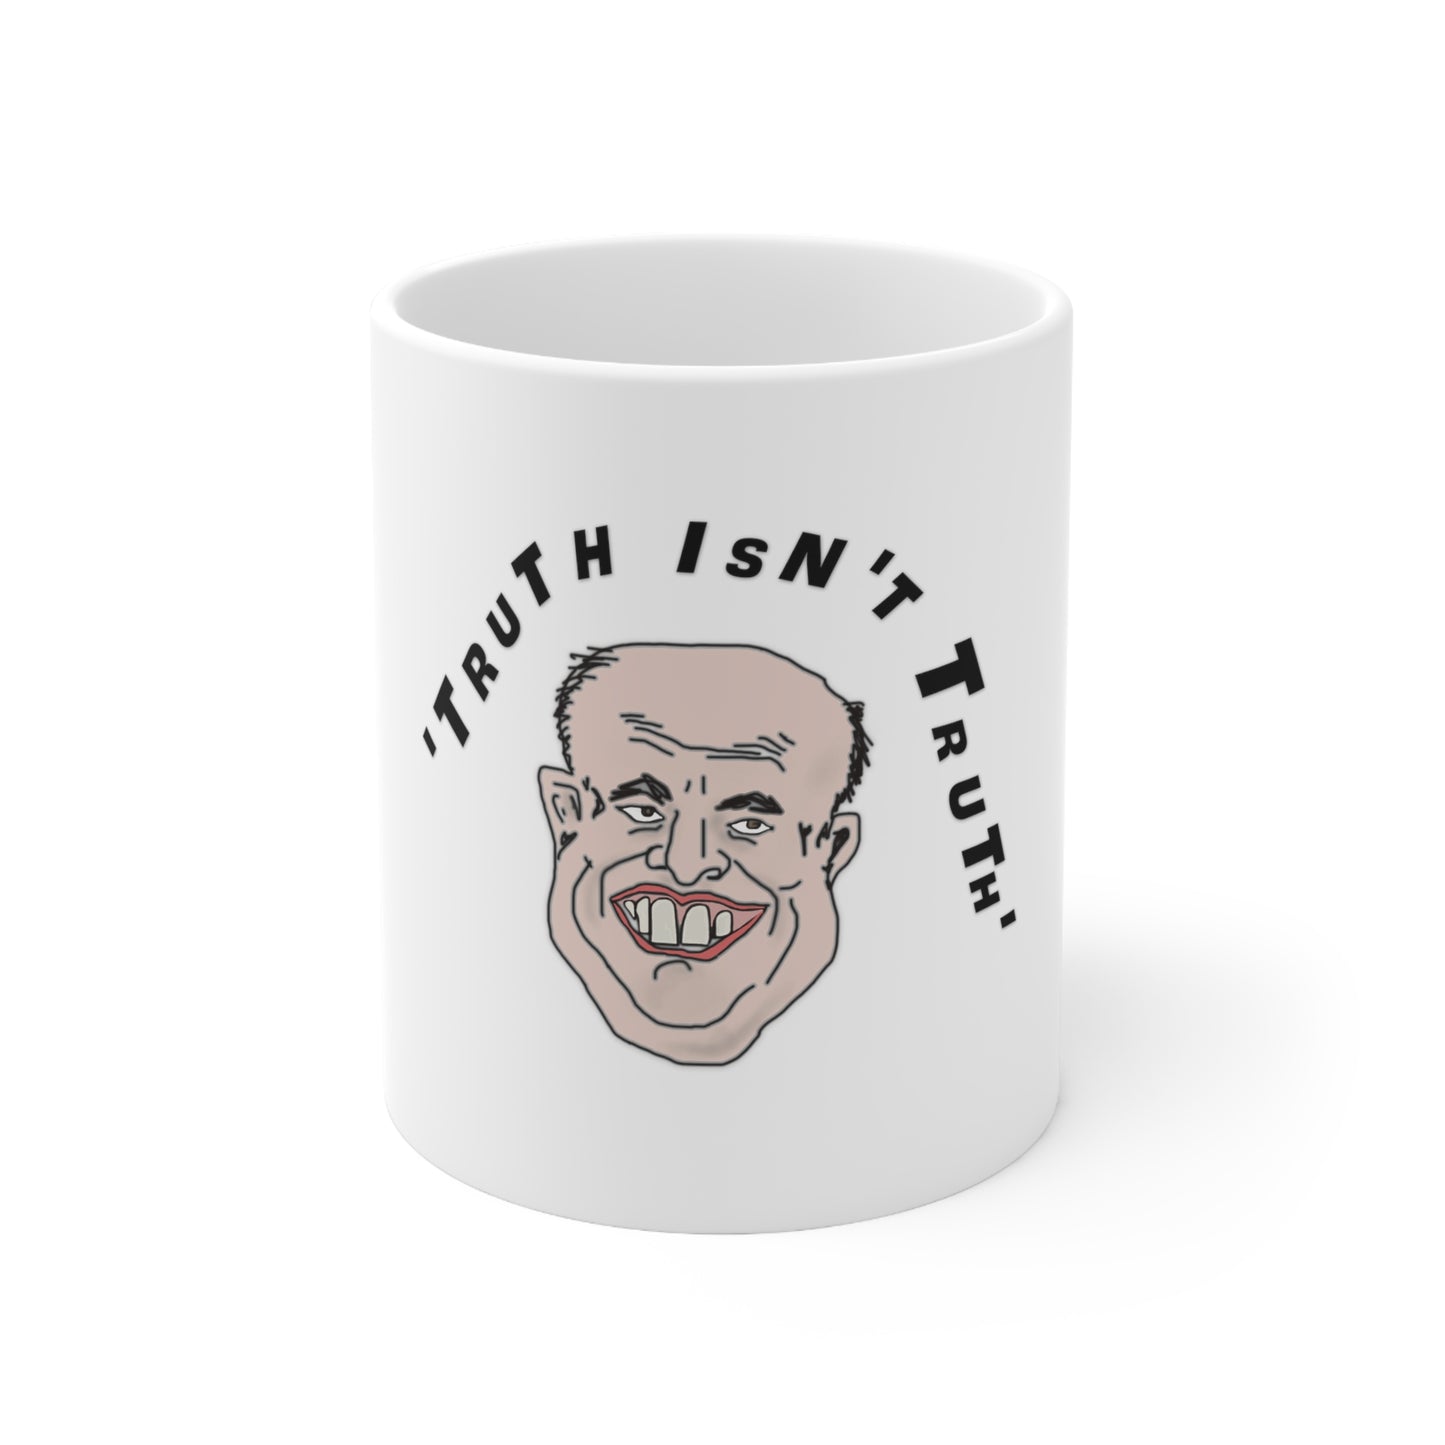 Rudy's Truth Coffee Mug